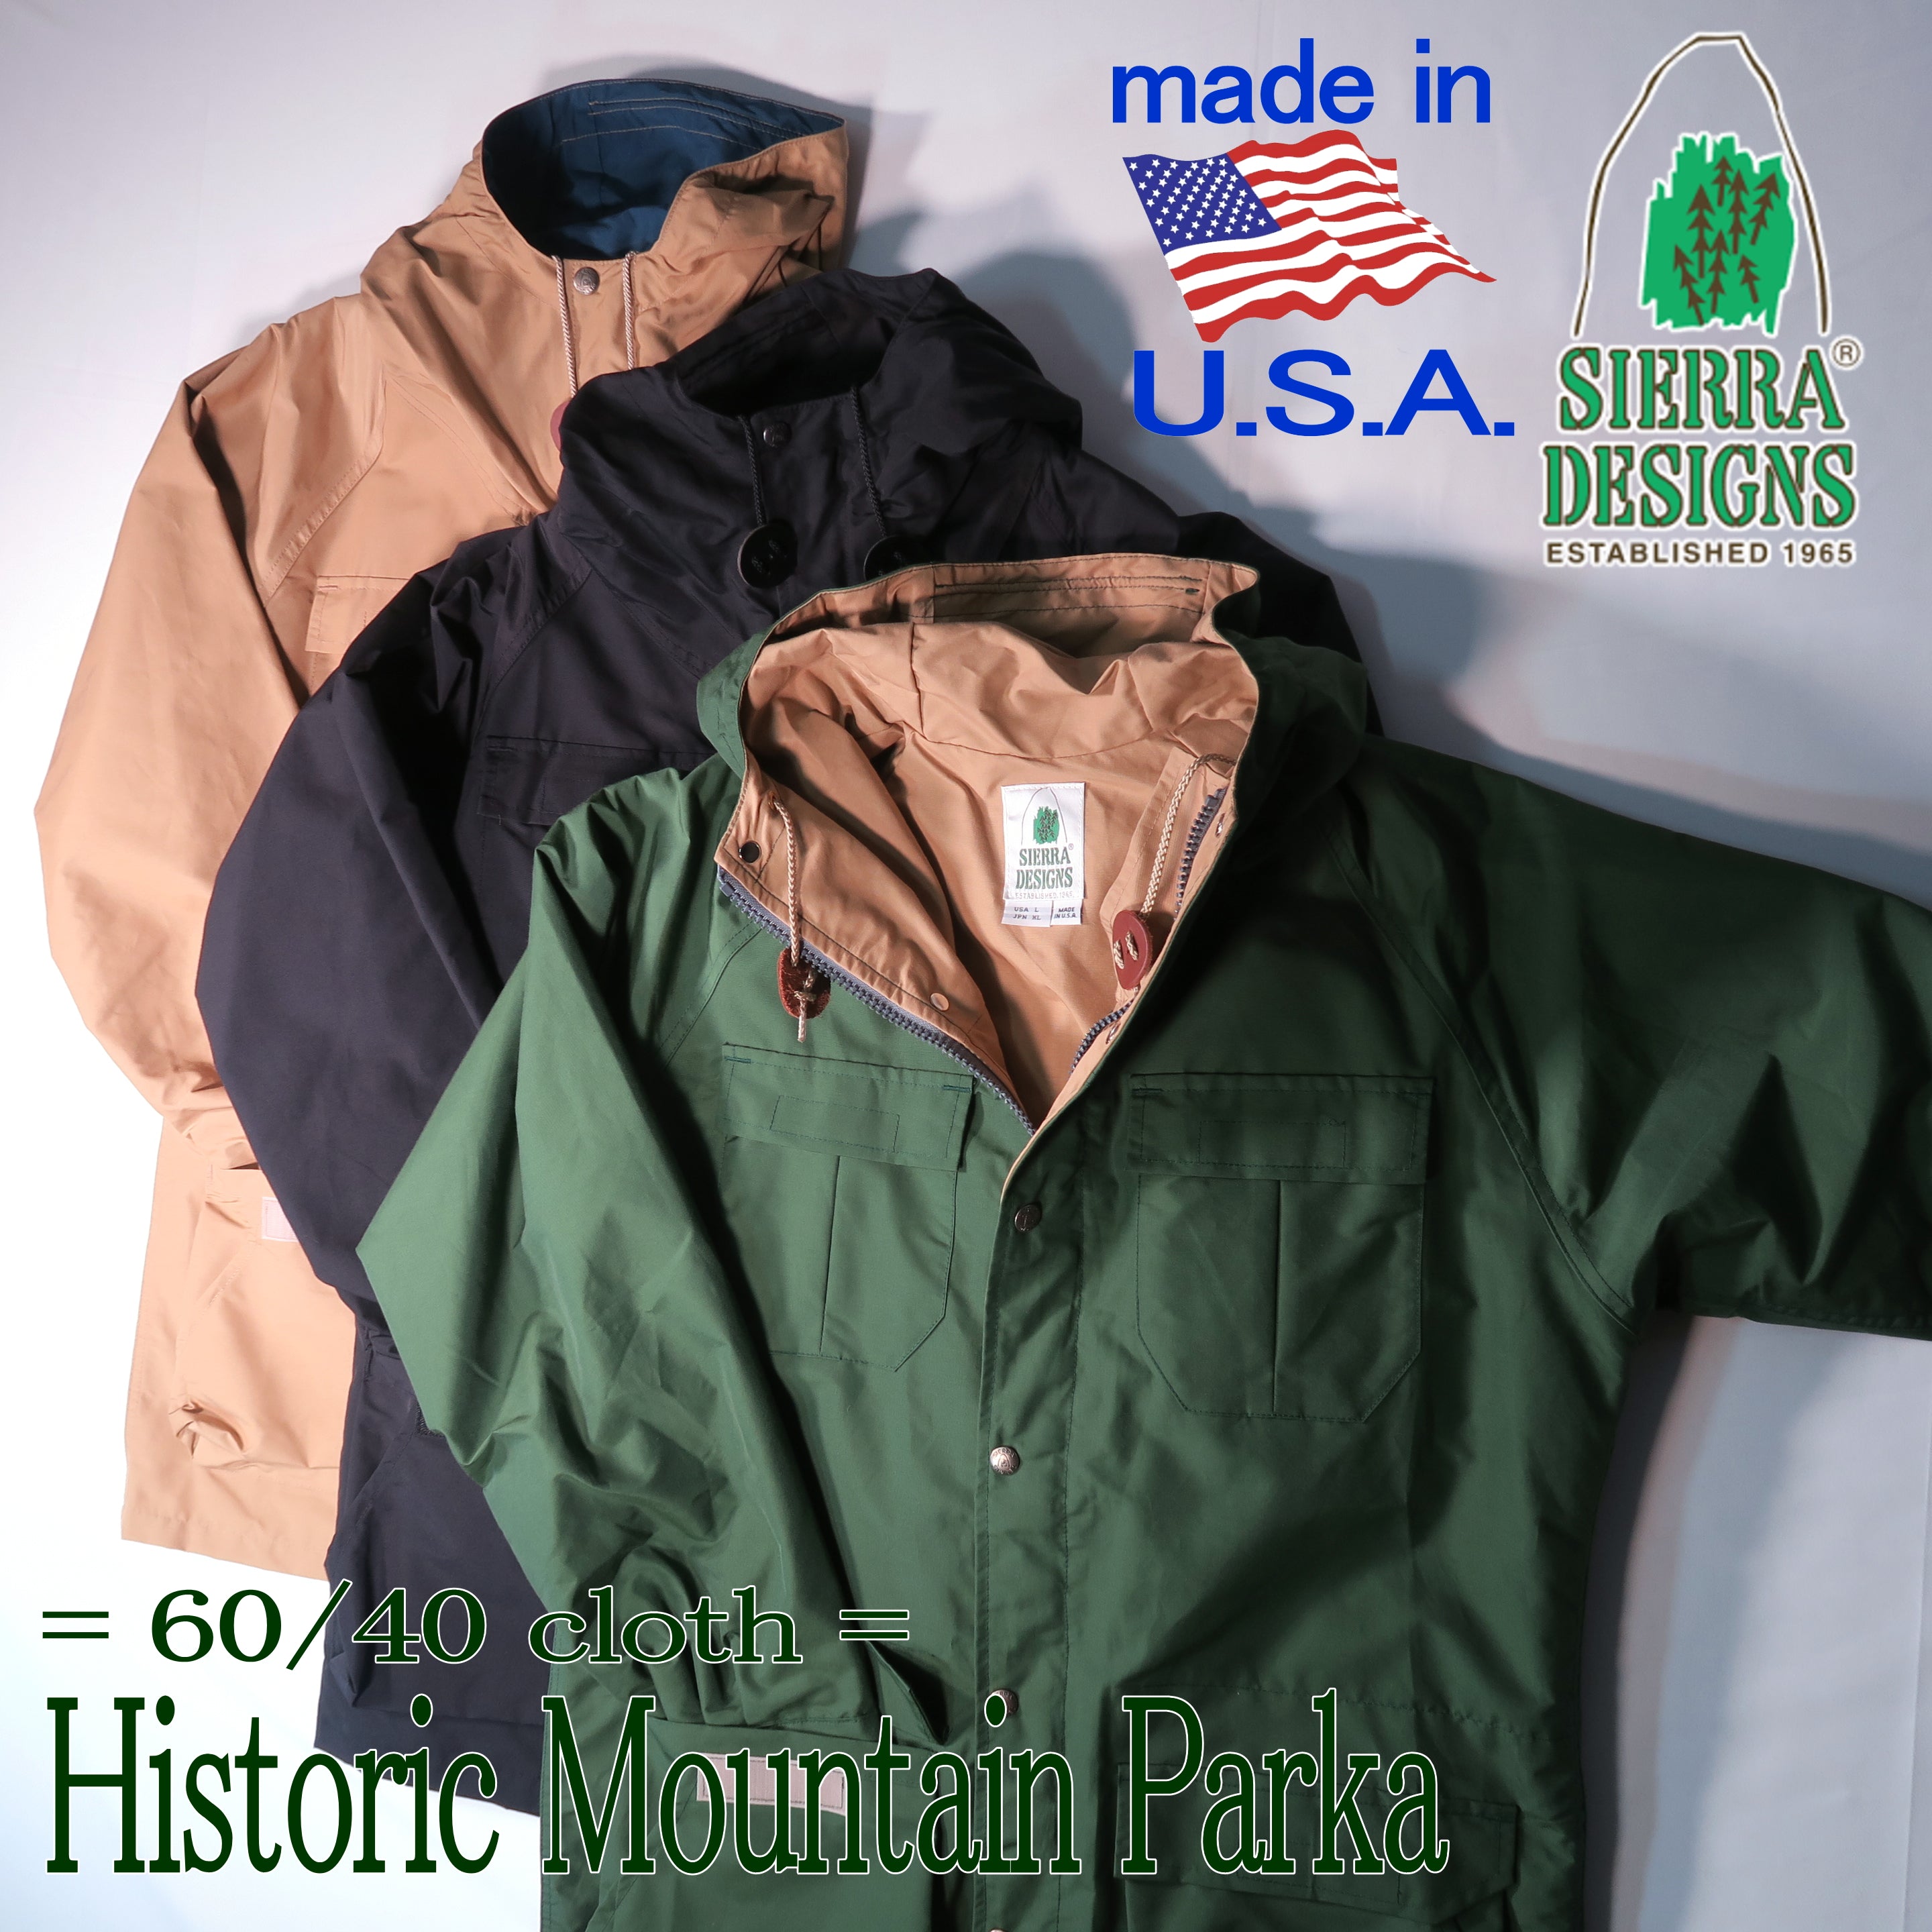 Historic Mountain Parka = 60/40 cloth =